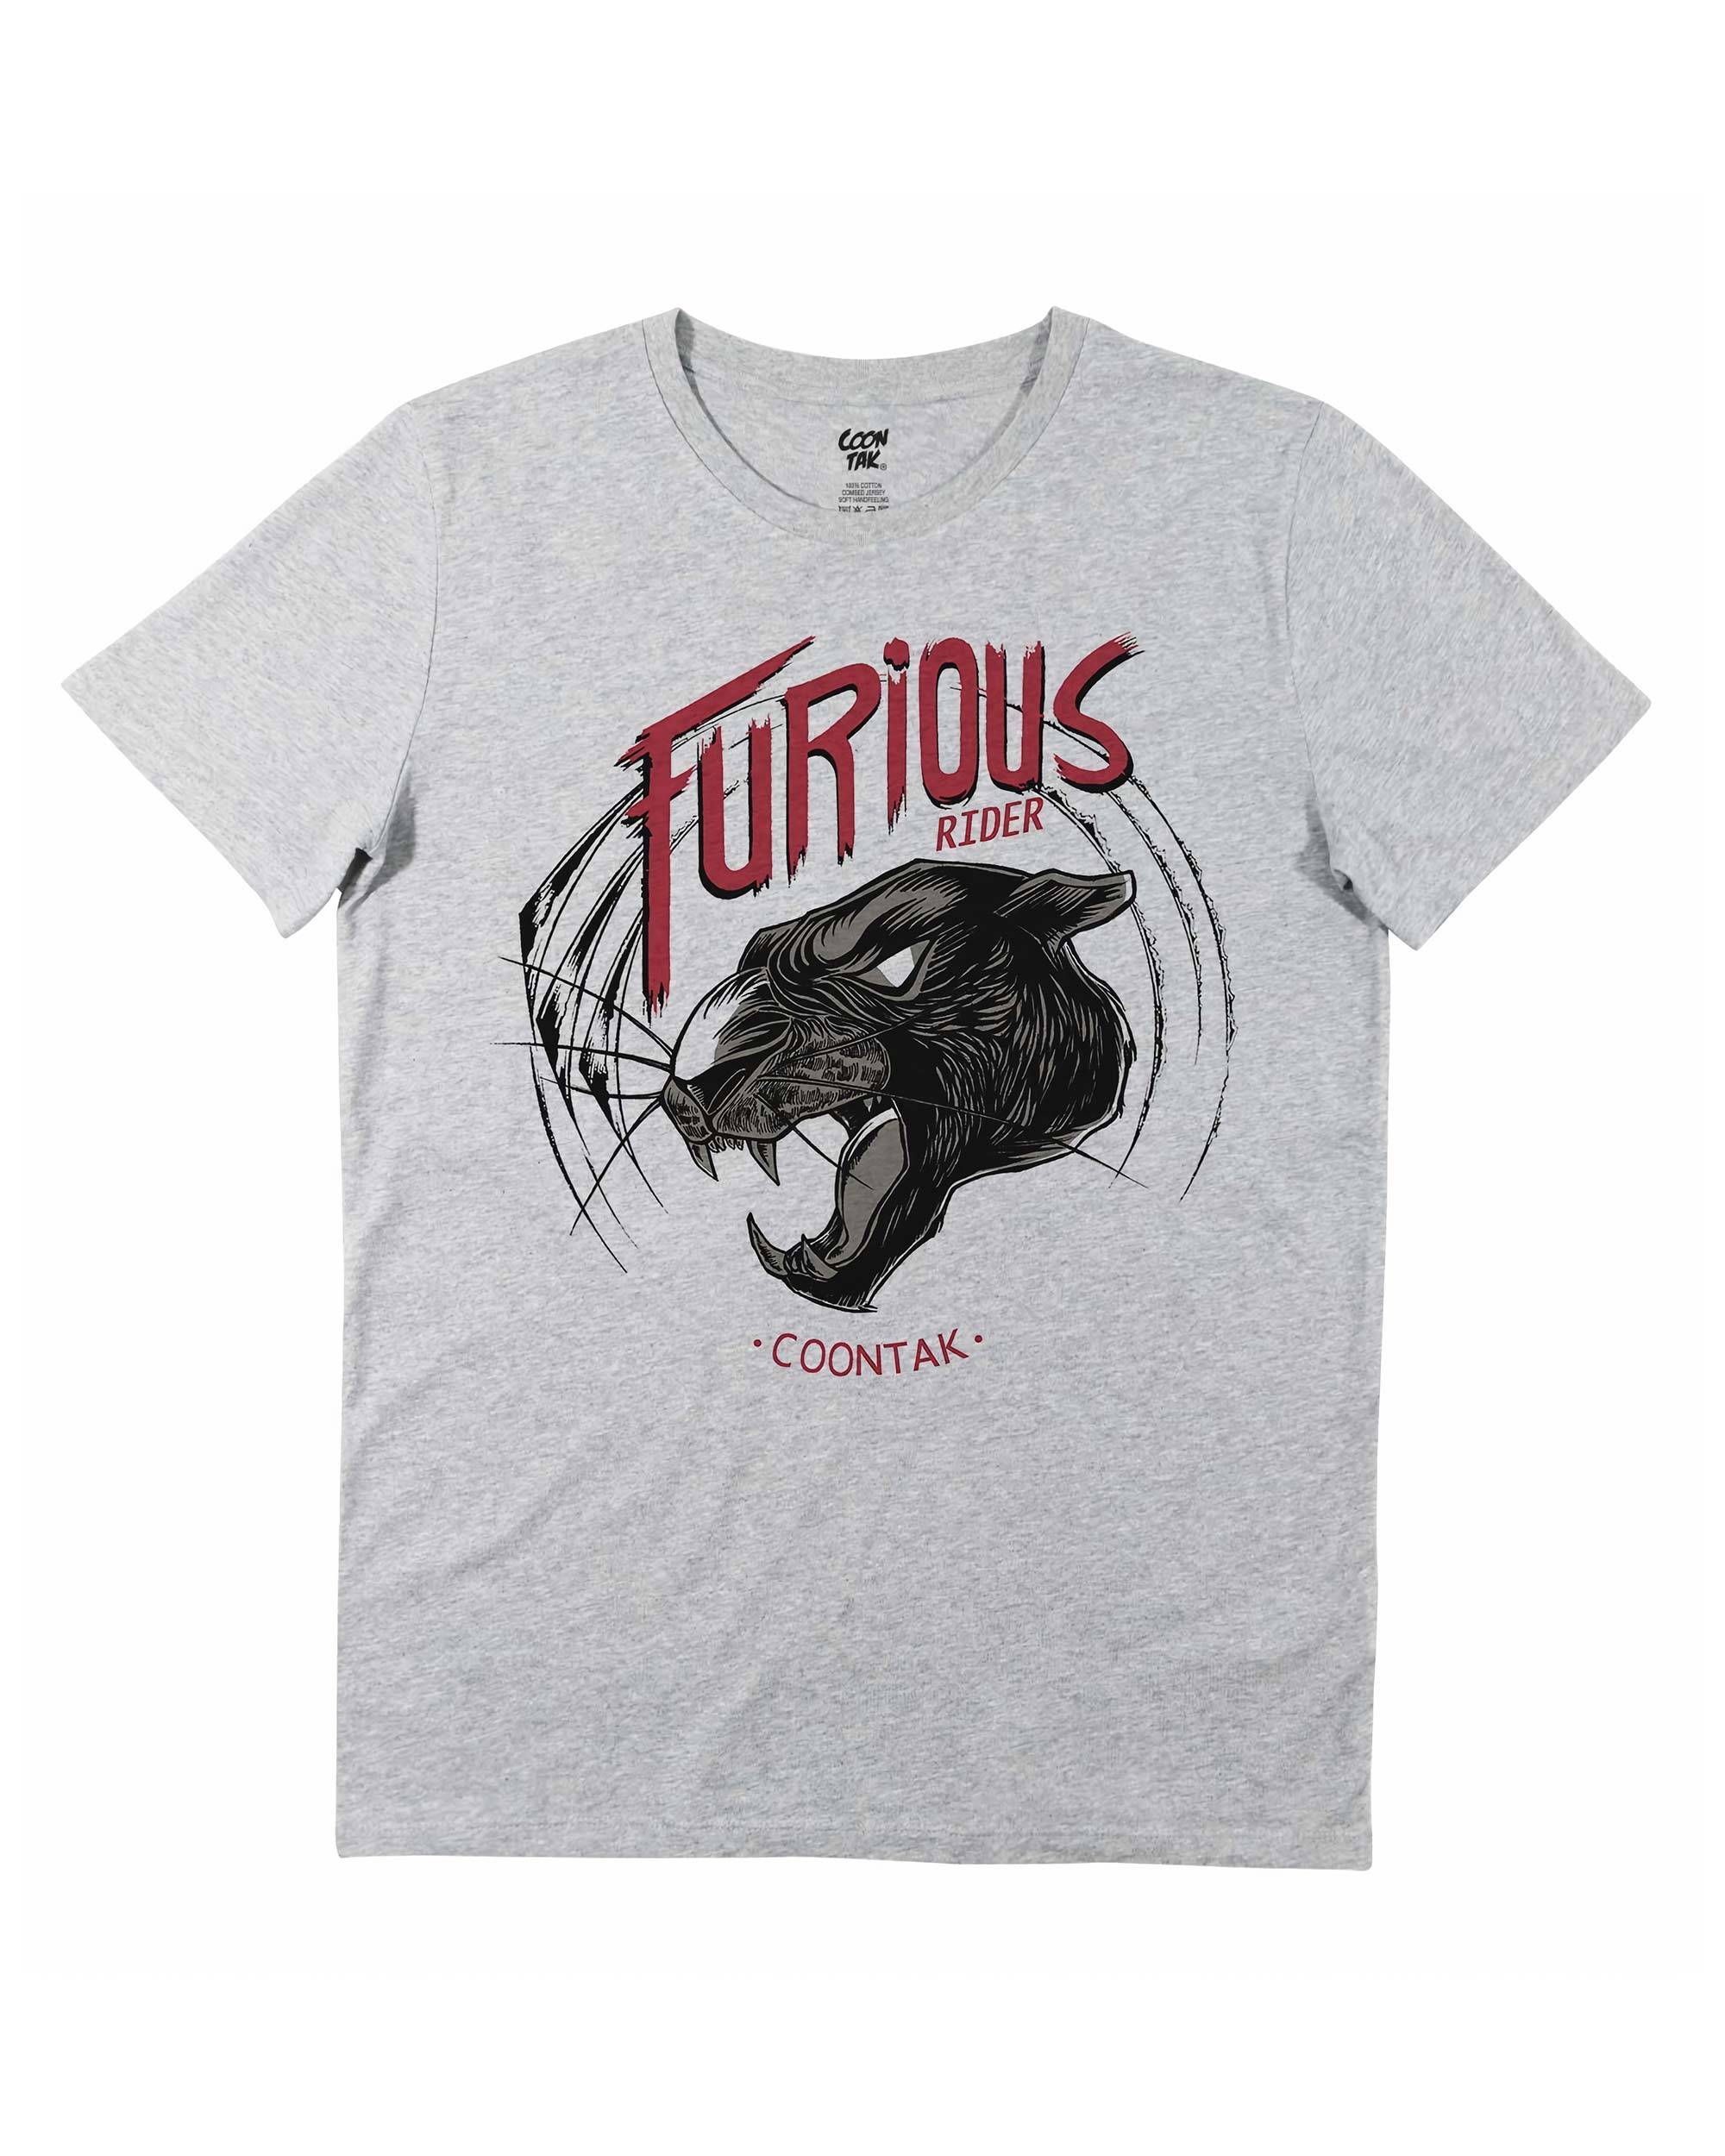 T-shirt Furious Rider Grafitee